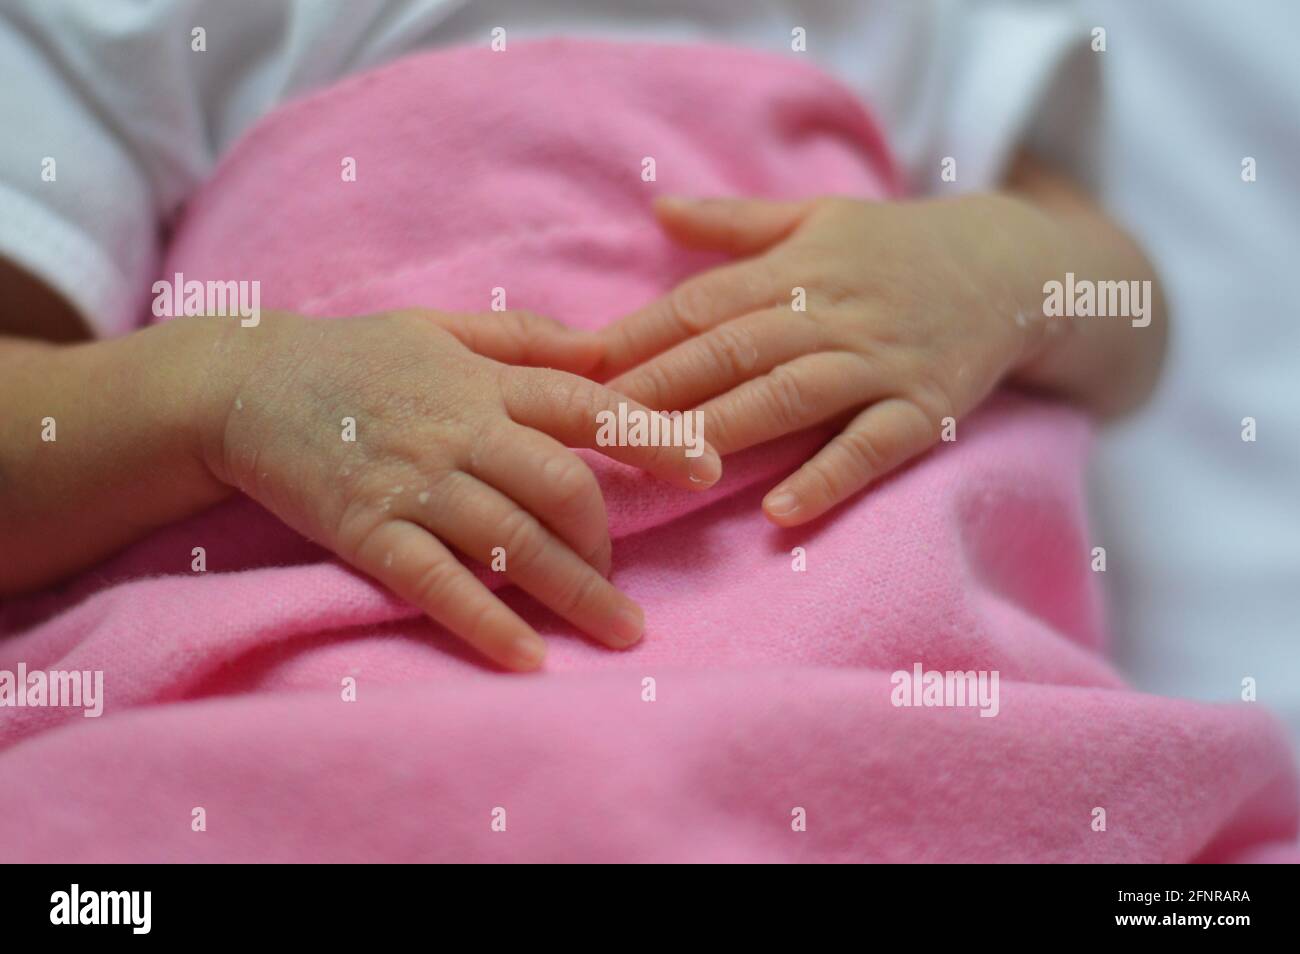 Newborn Baby Hands Touching in Pink Blanket Stock Photo